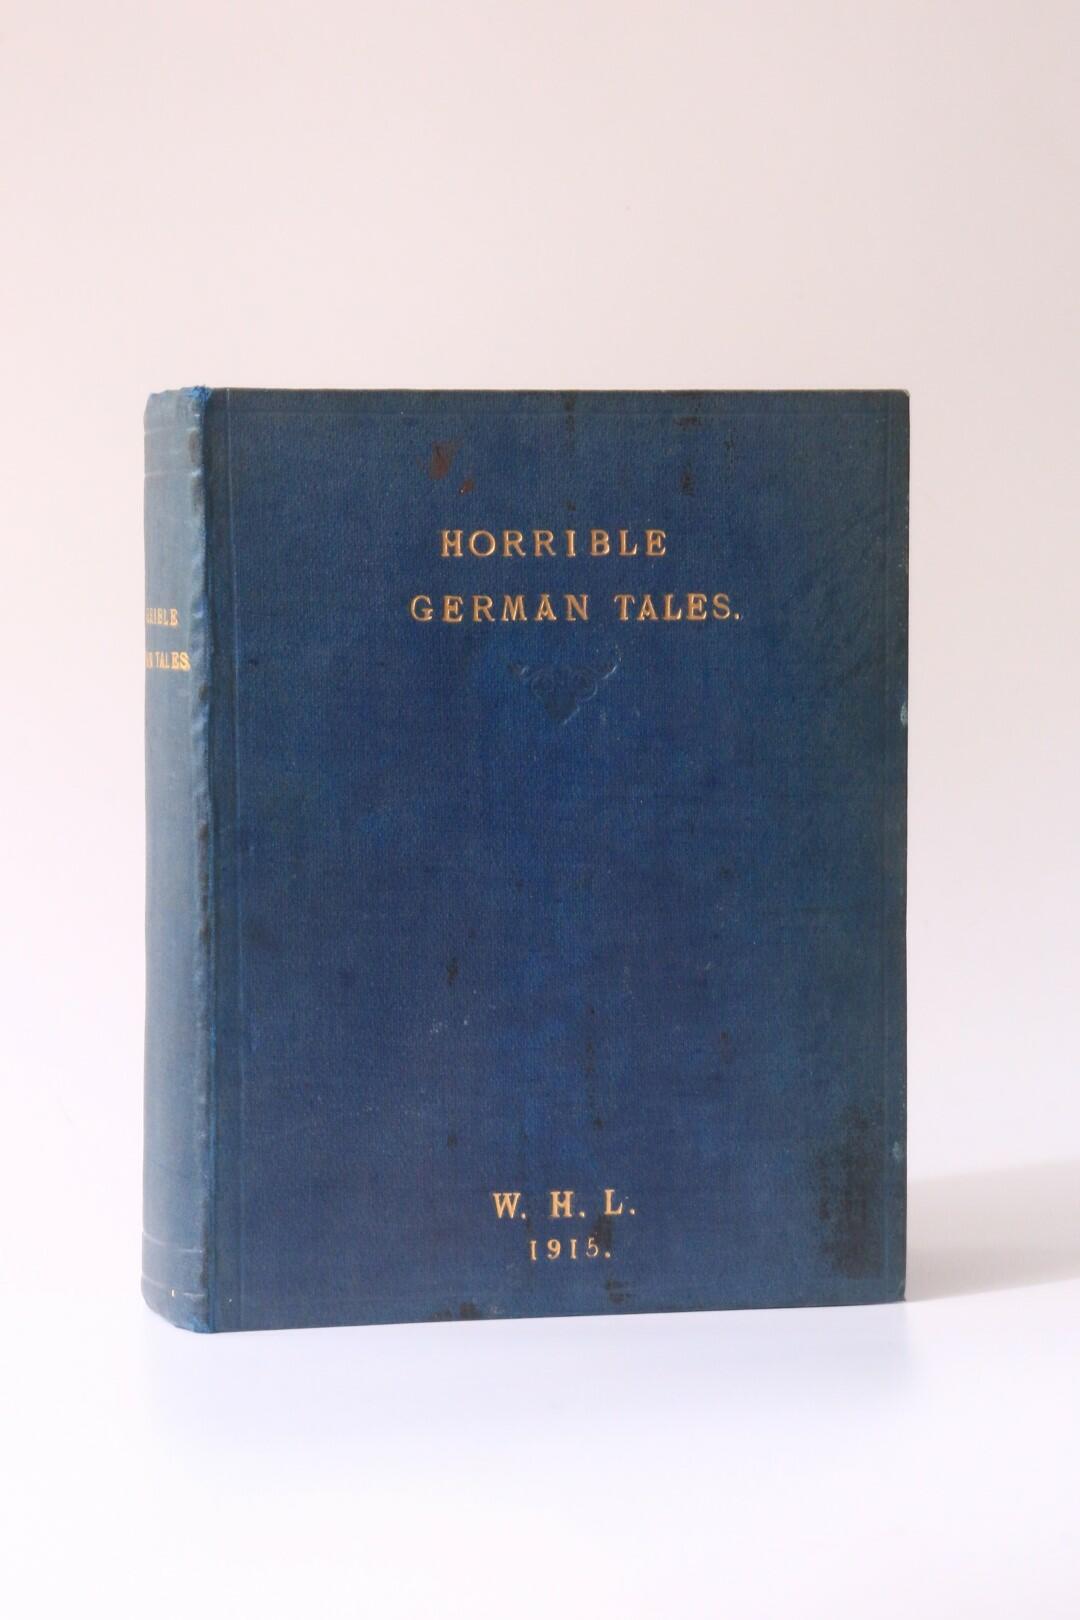 Hanns Heinz Ewers [trans. William Henry Lowe] - Supernatural Tales [Horrible German Tales] - No Publisher, 1915, Manuscript.